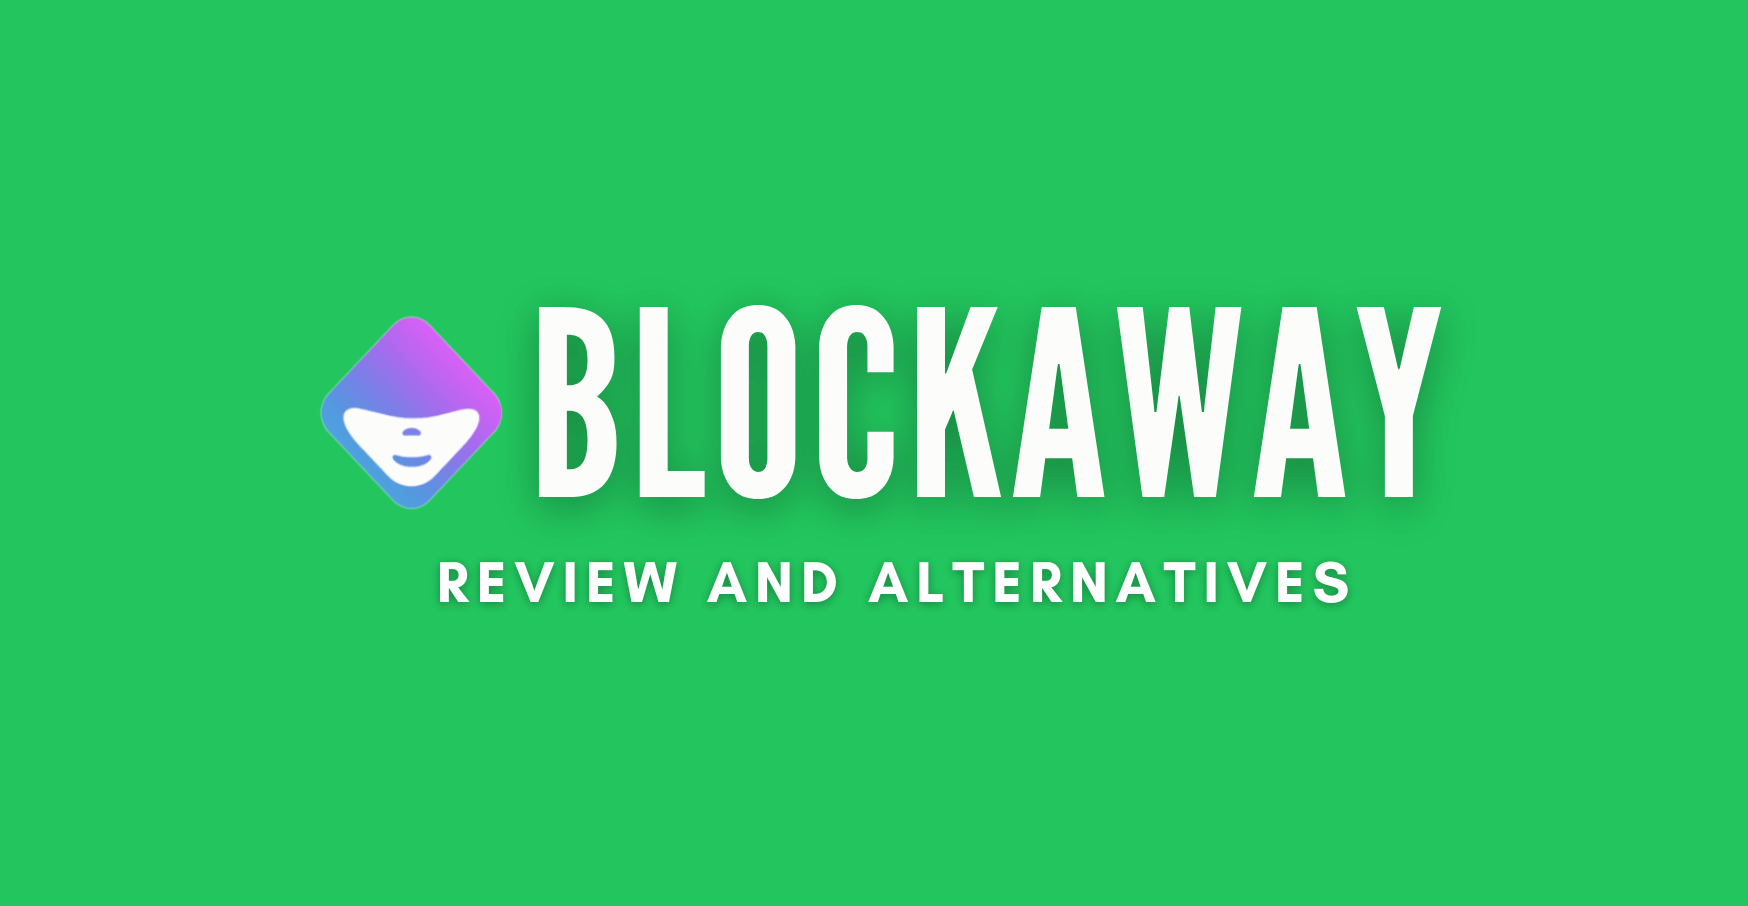 blockaway review and alternatives